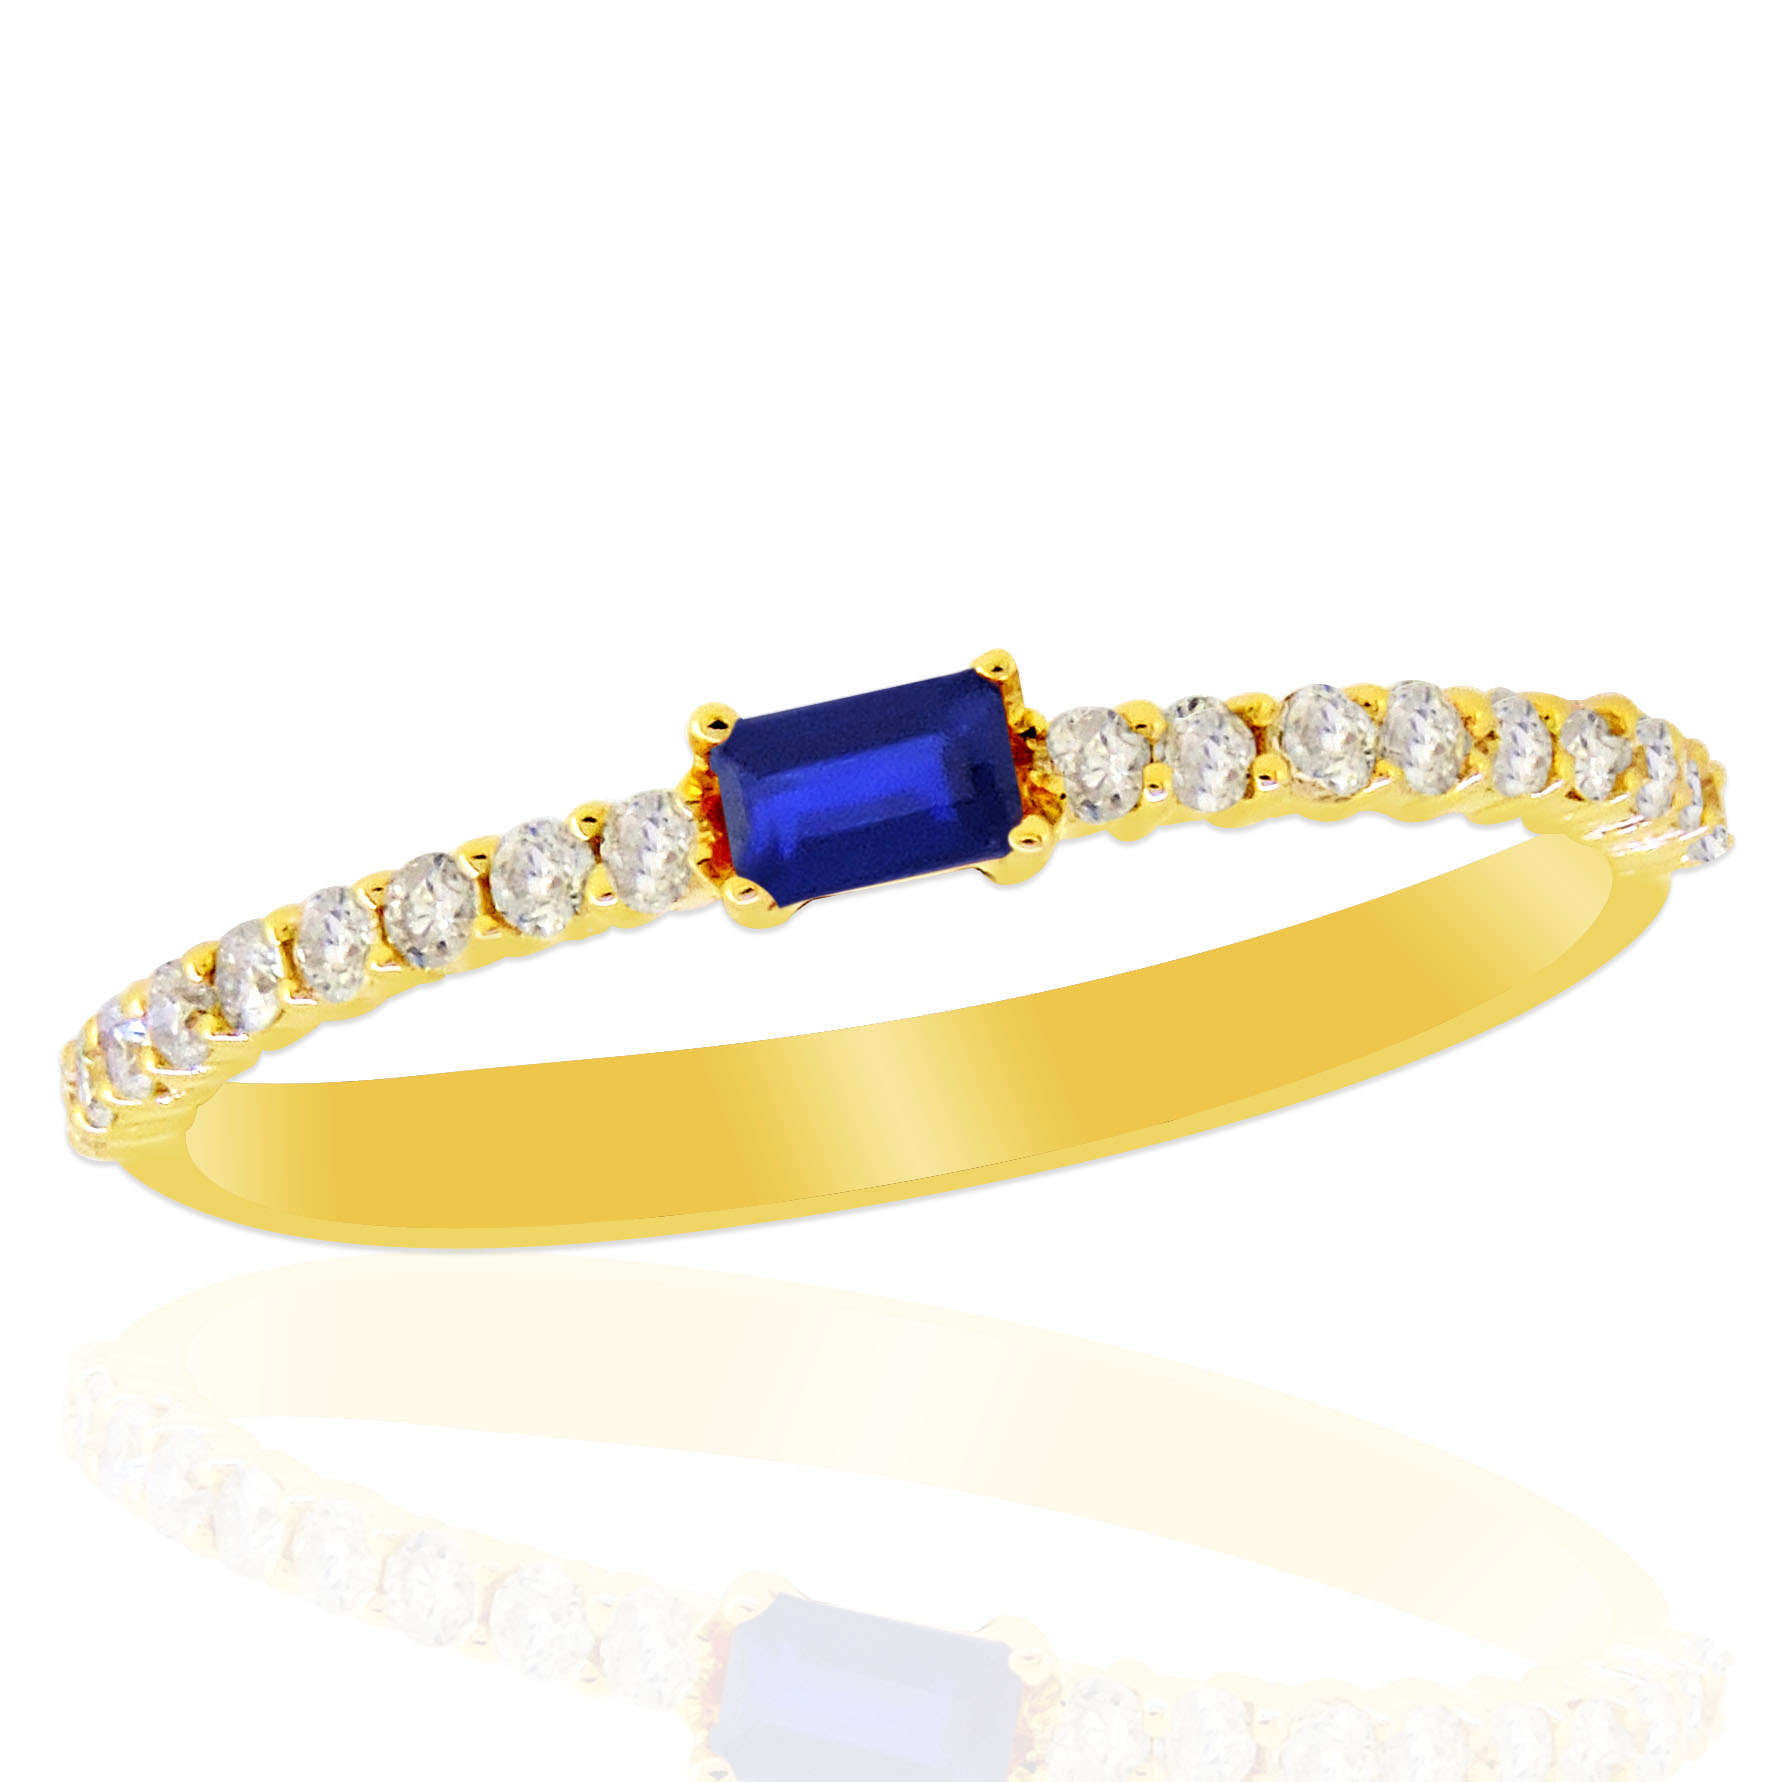 Lali 14 karat yellow gold diamond and blue sapphire ring